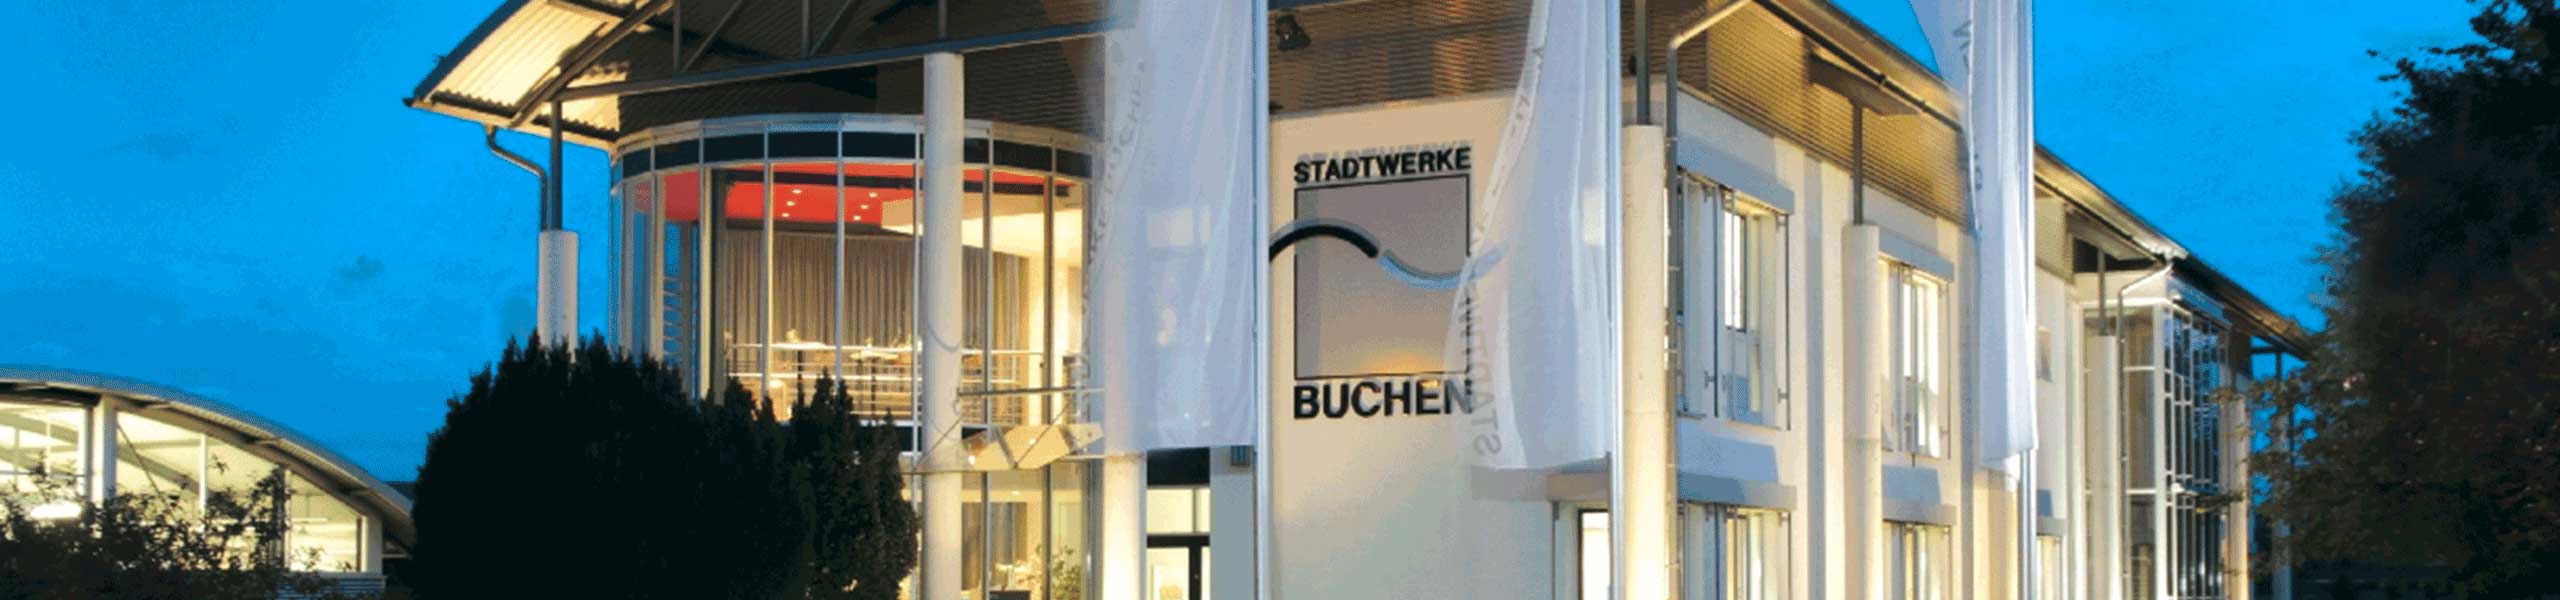 Stadtwerke Buchen GmbH & Co KG - Limbach